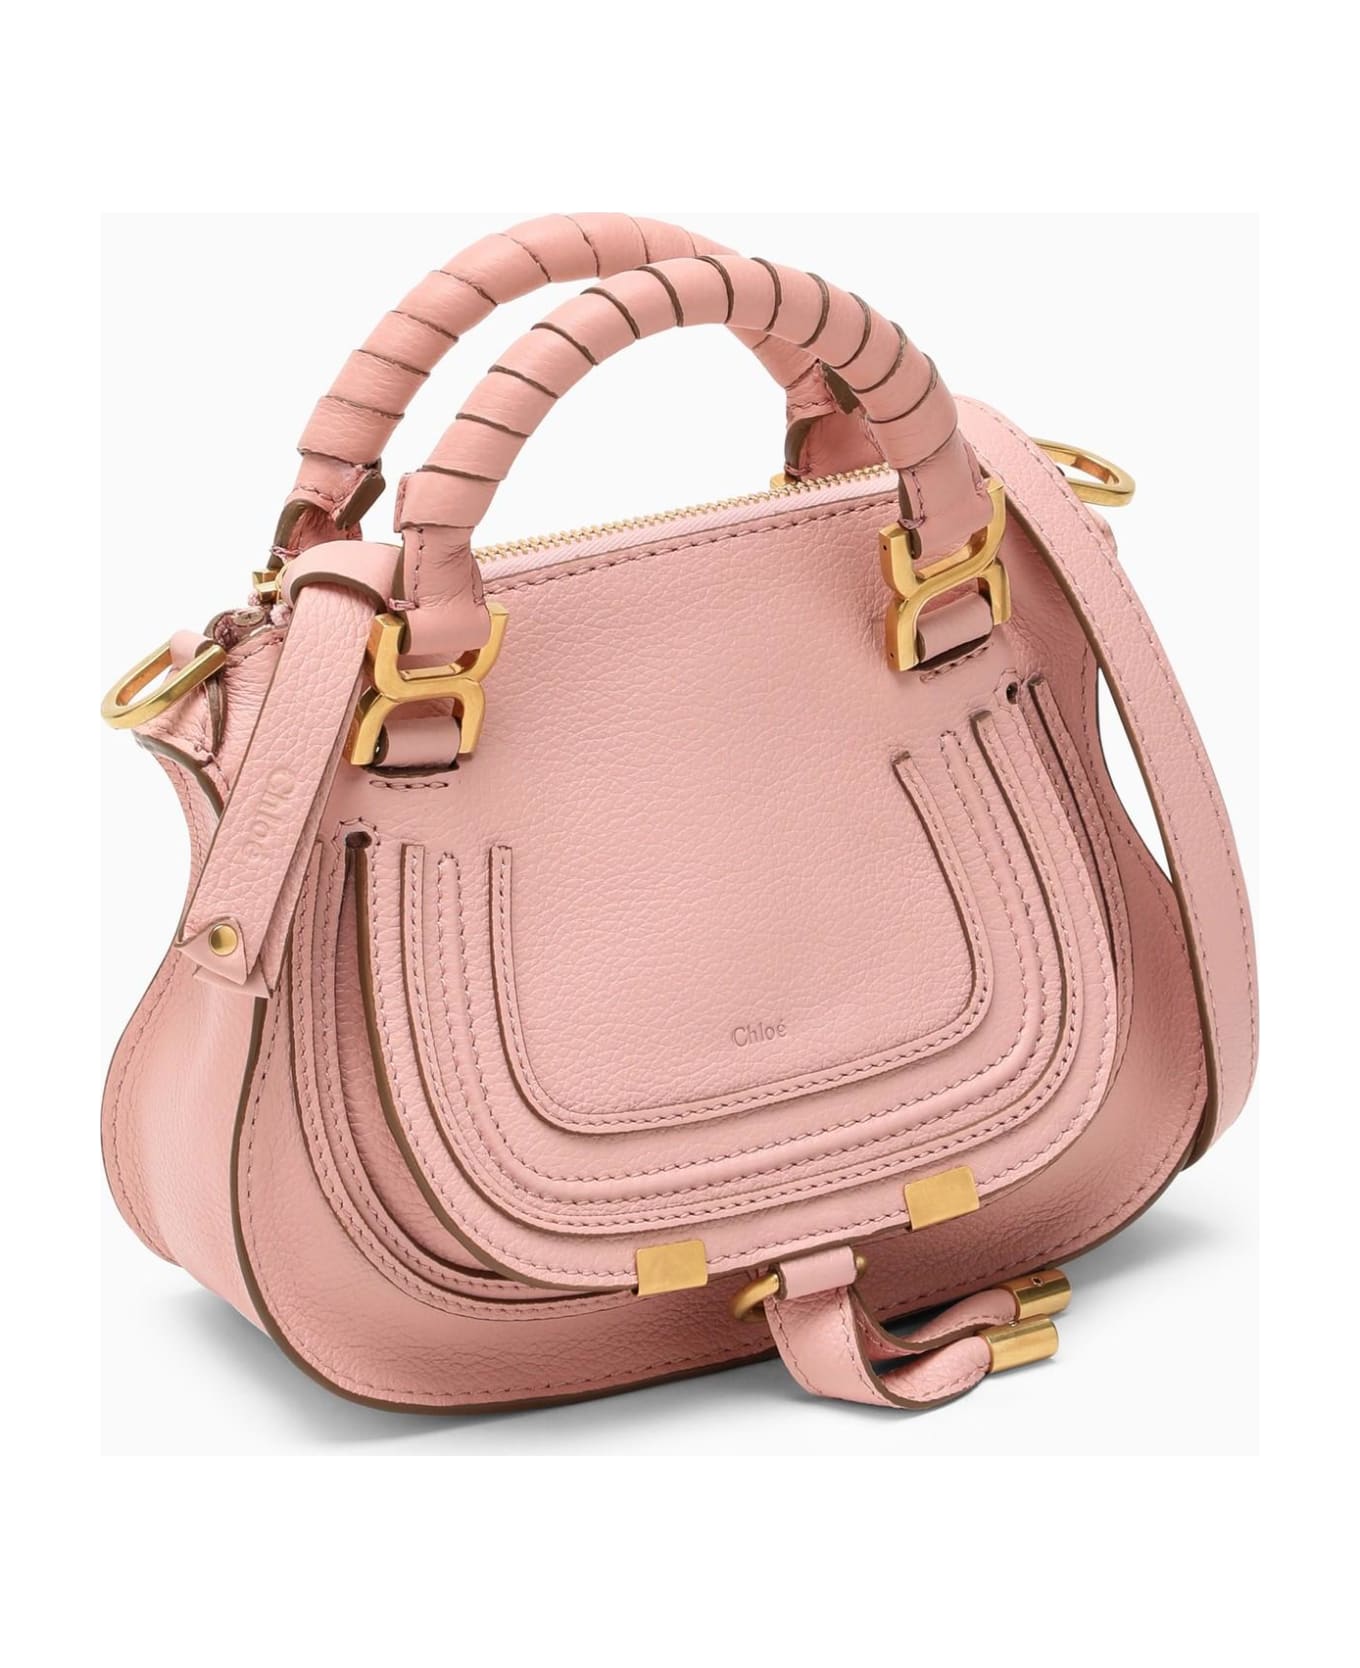 Chloé Marcie Handbag - rose-pink トートバッグ